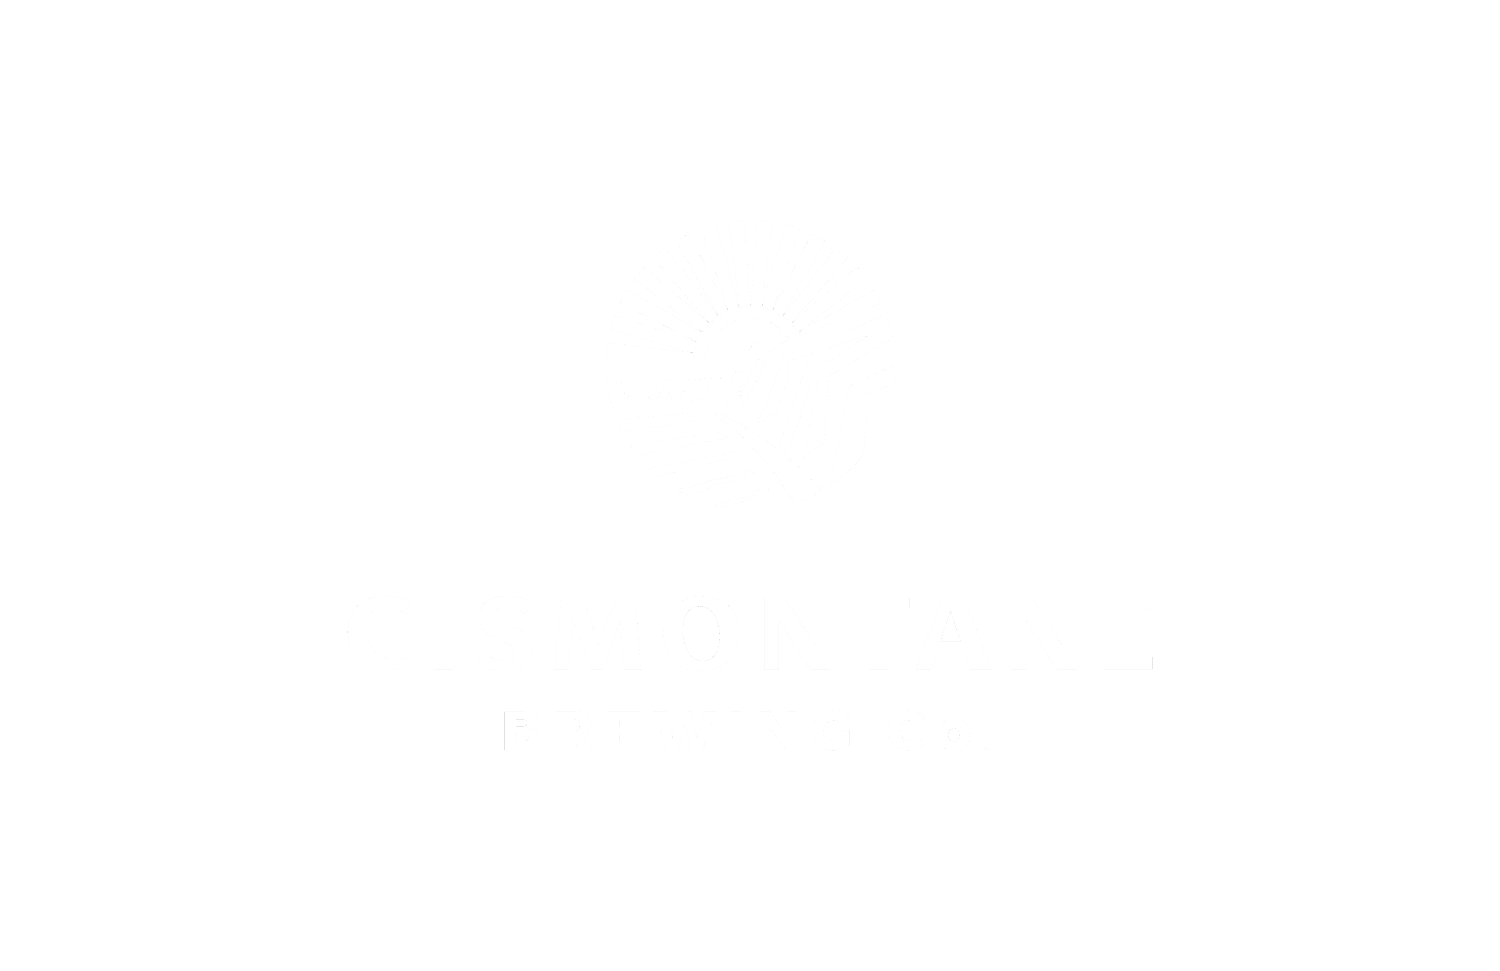 CISMONTANE BREWING Co.